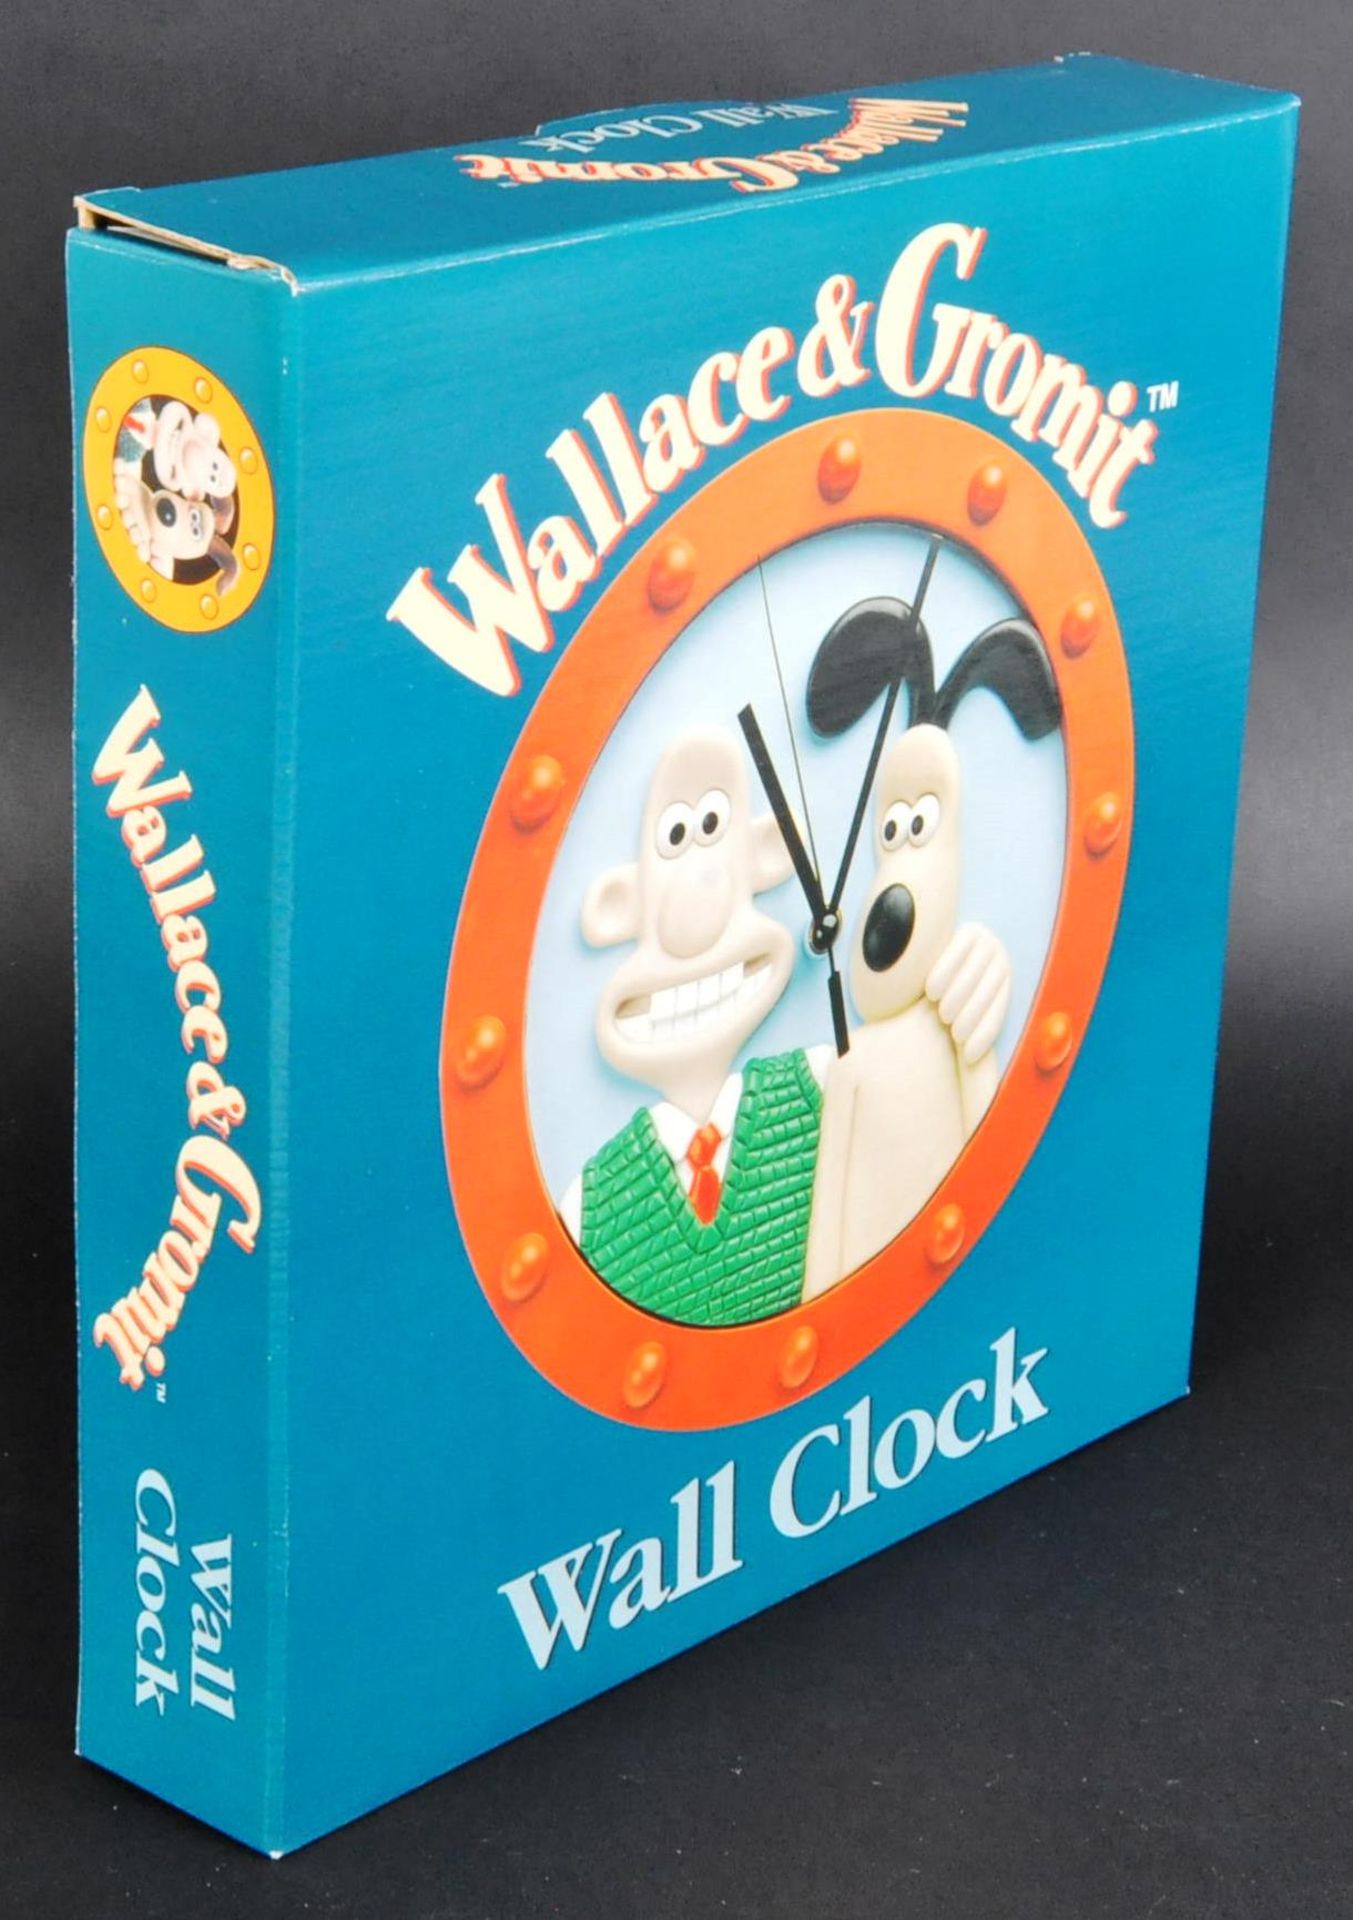 WALLACE & GROMIT - AARDMAN ANIMATIONS - UNUSED VINTAGE WALL CLOCK - Image 2 of 4